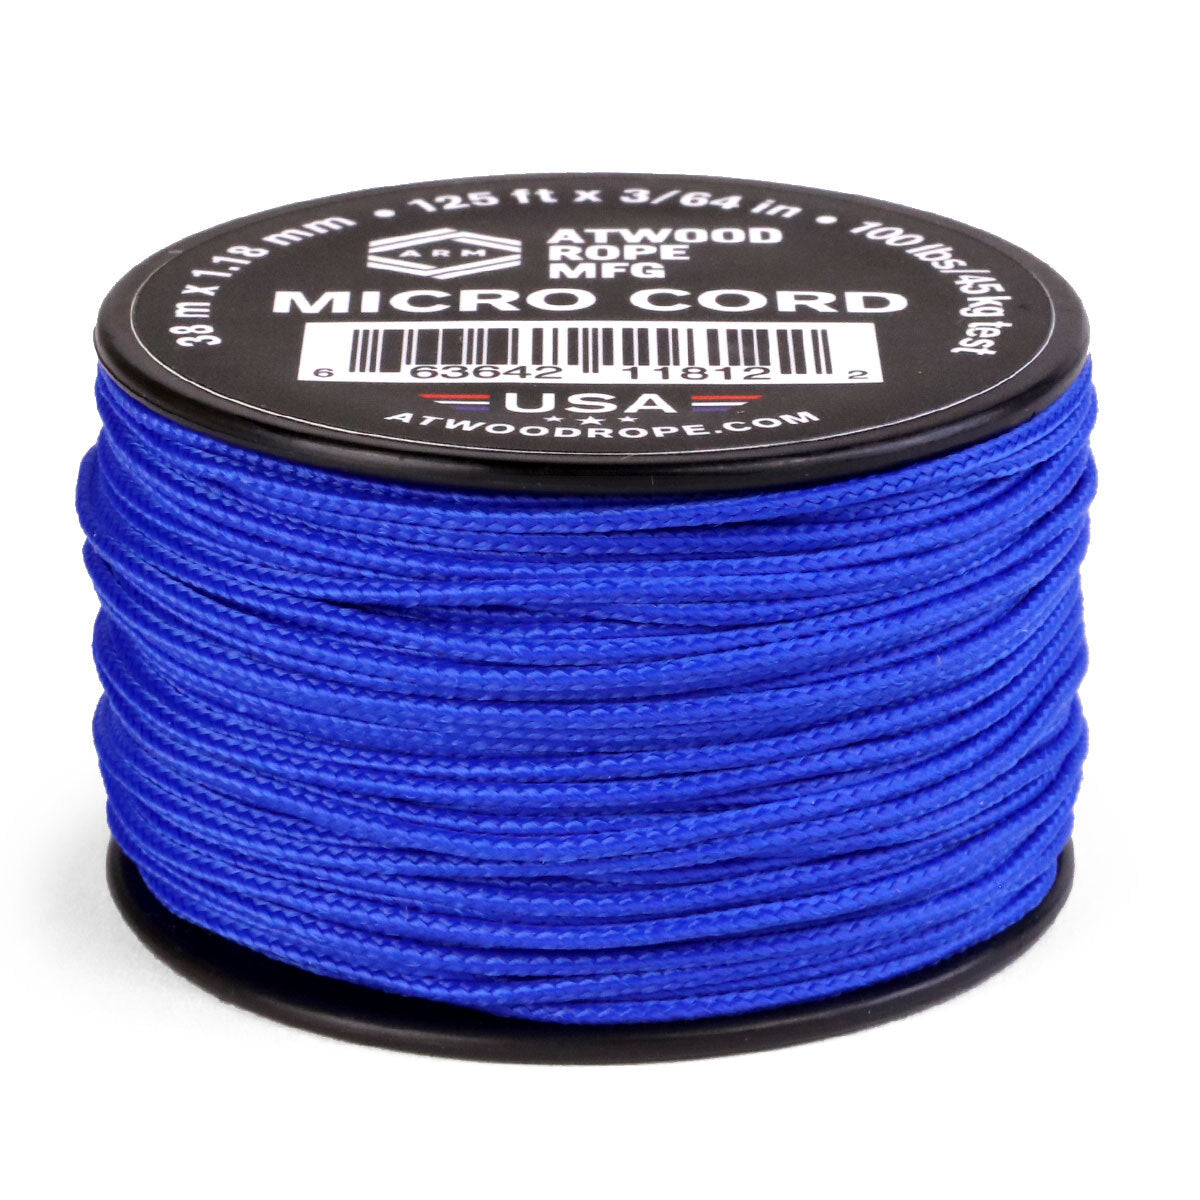 1.18mm Micro Cord - Ultramarine Blue